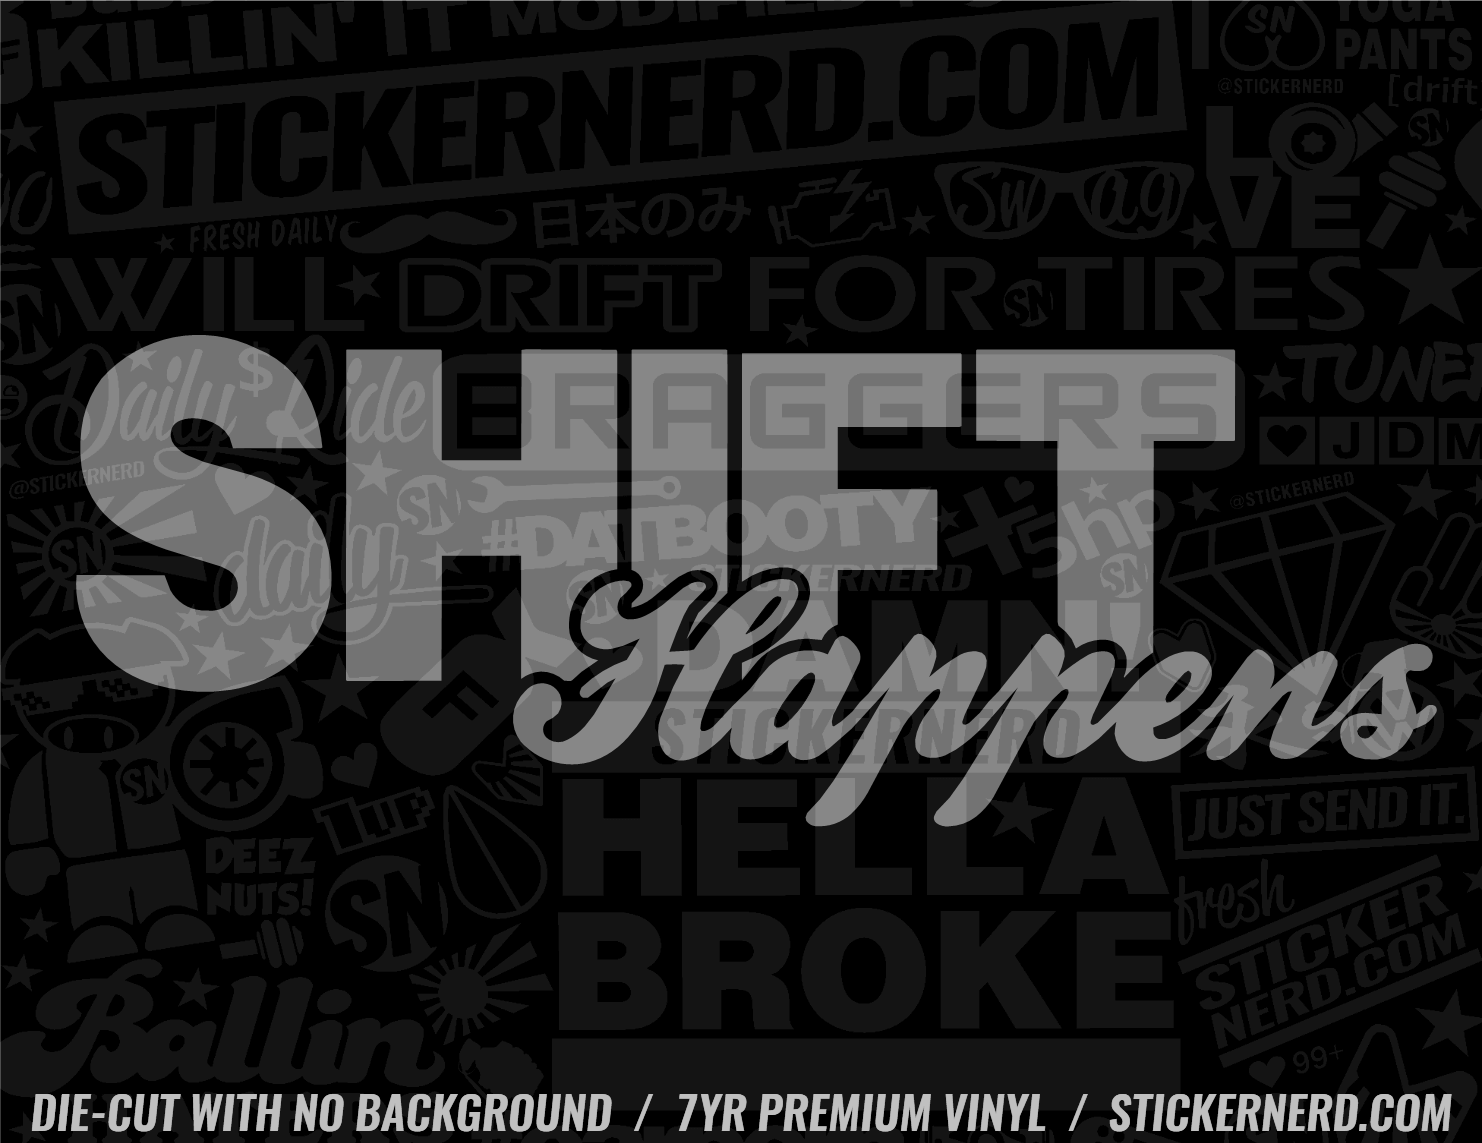 Shift Happens Sticker - Decal - STICKERNERD.COM